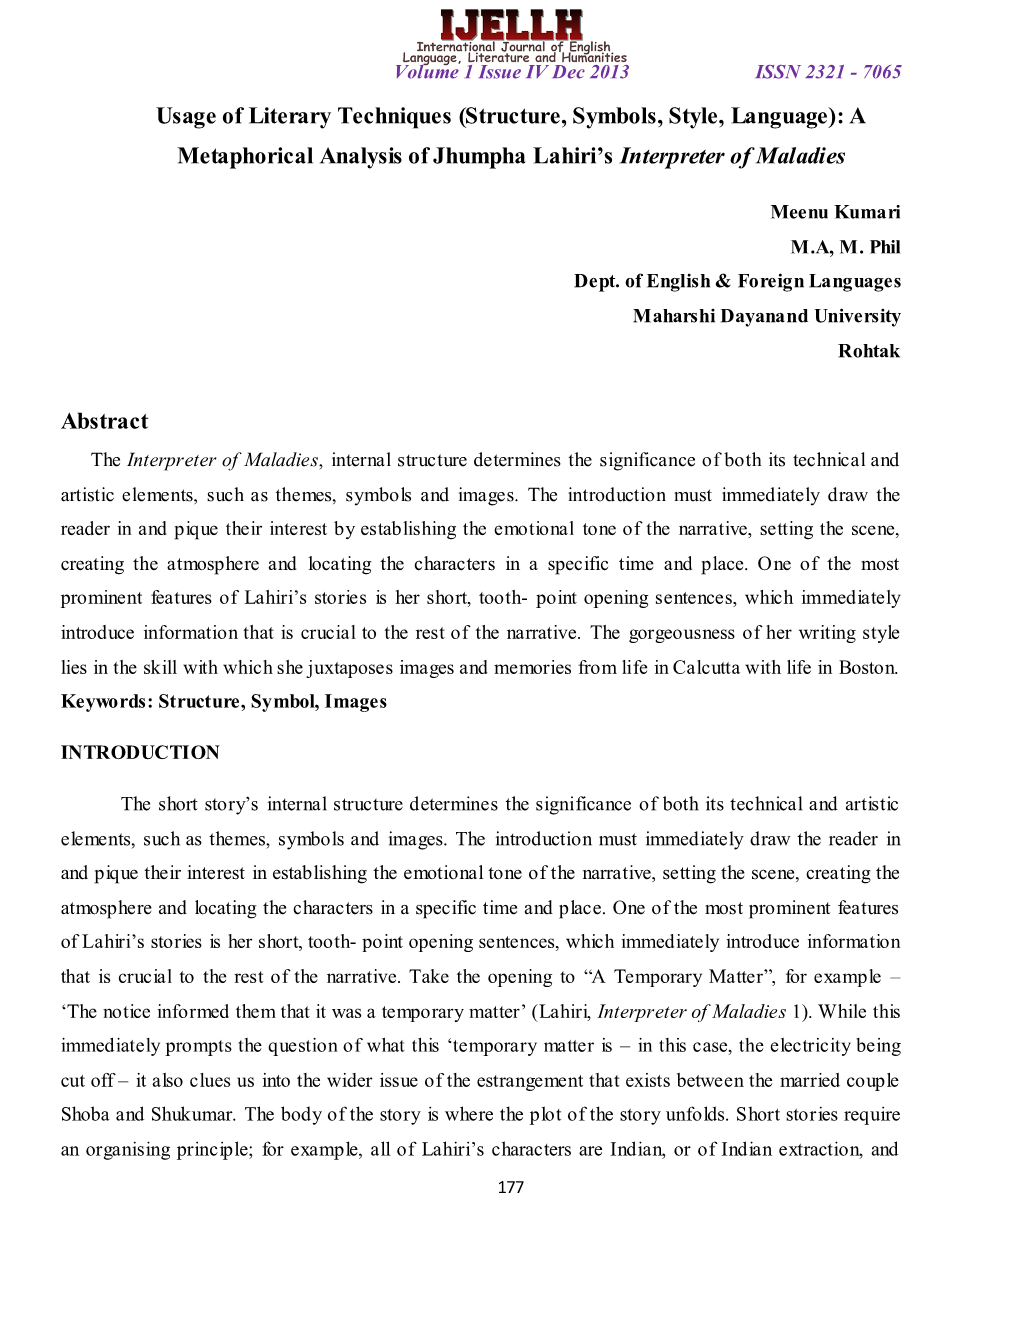 Usage of Literary Techniques (Structure, Symbols, Style, Language): a Metaphorical Analysis of Jhumpha Lahiri’S Interpreter of Maladies